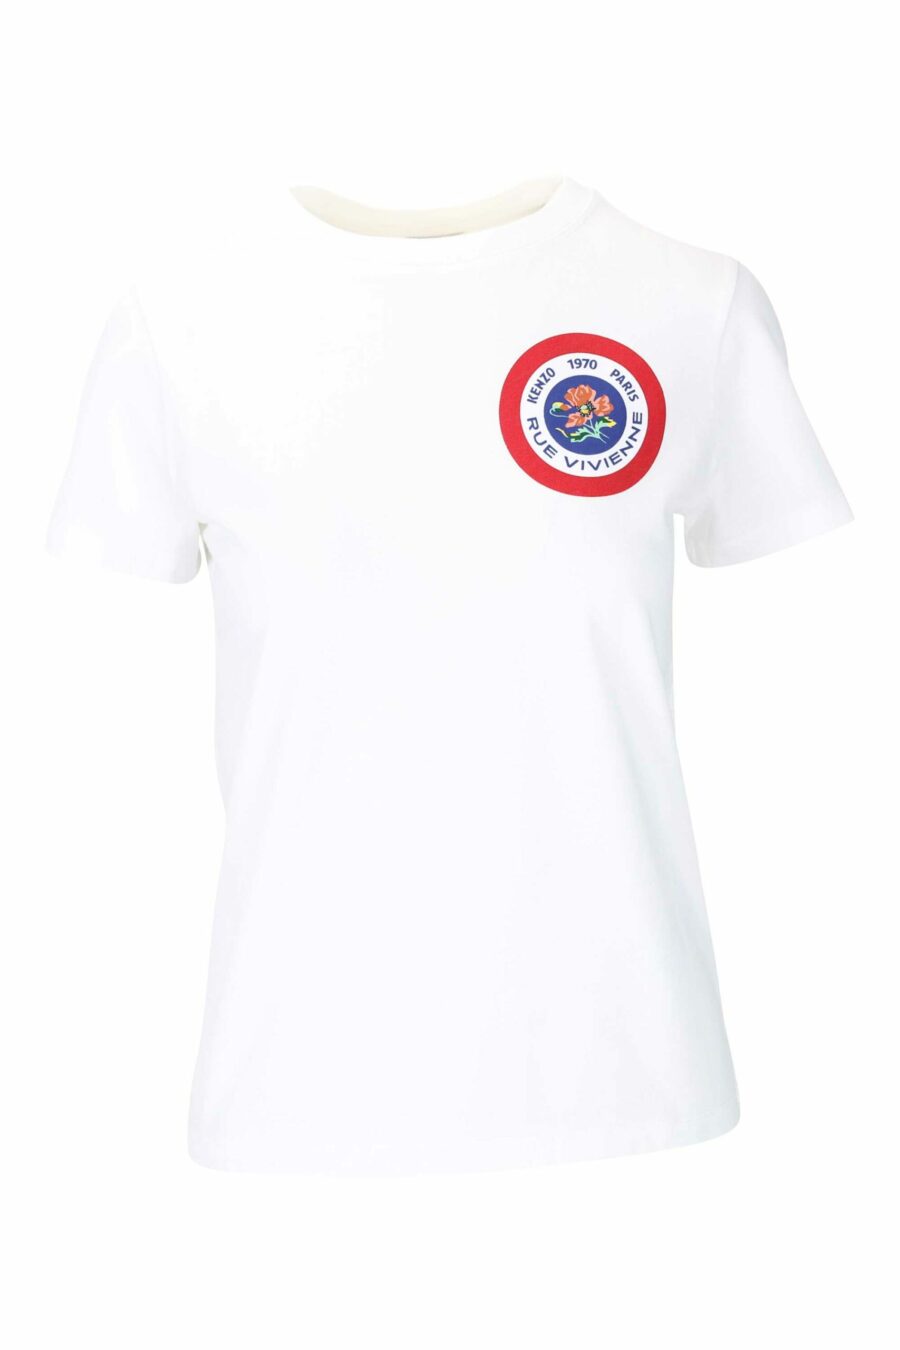 Camiseta blanca con minilogo redondo y gráfica detrás - 3612230517936 1 scaled